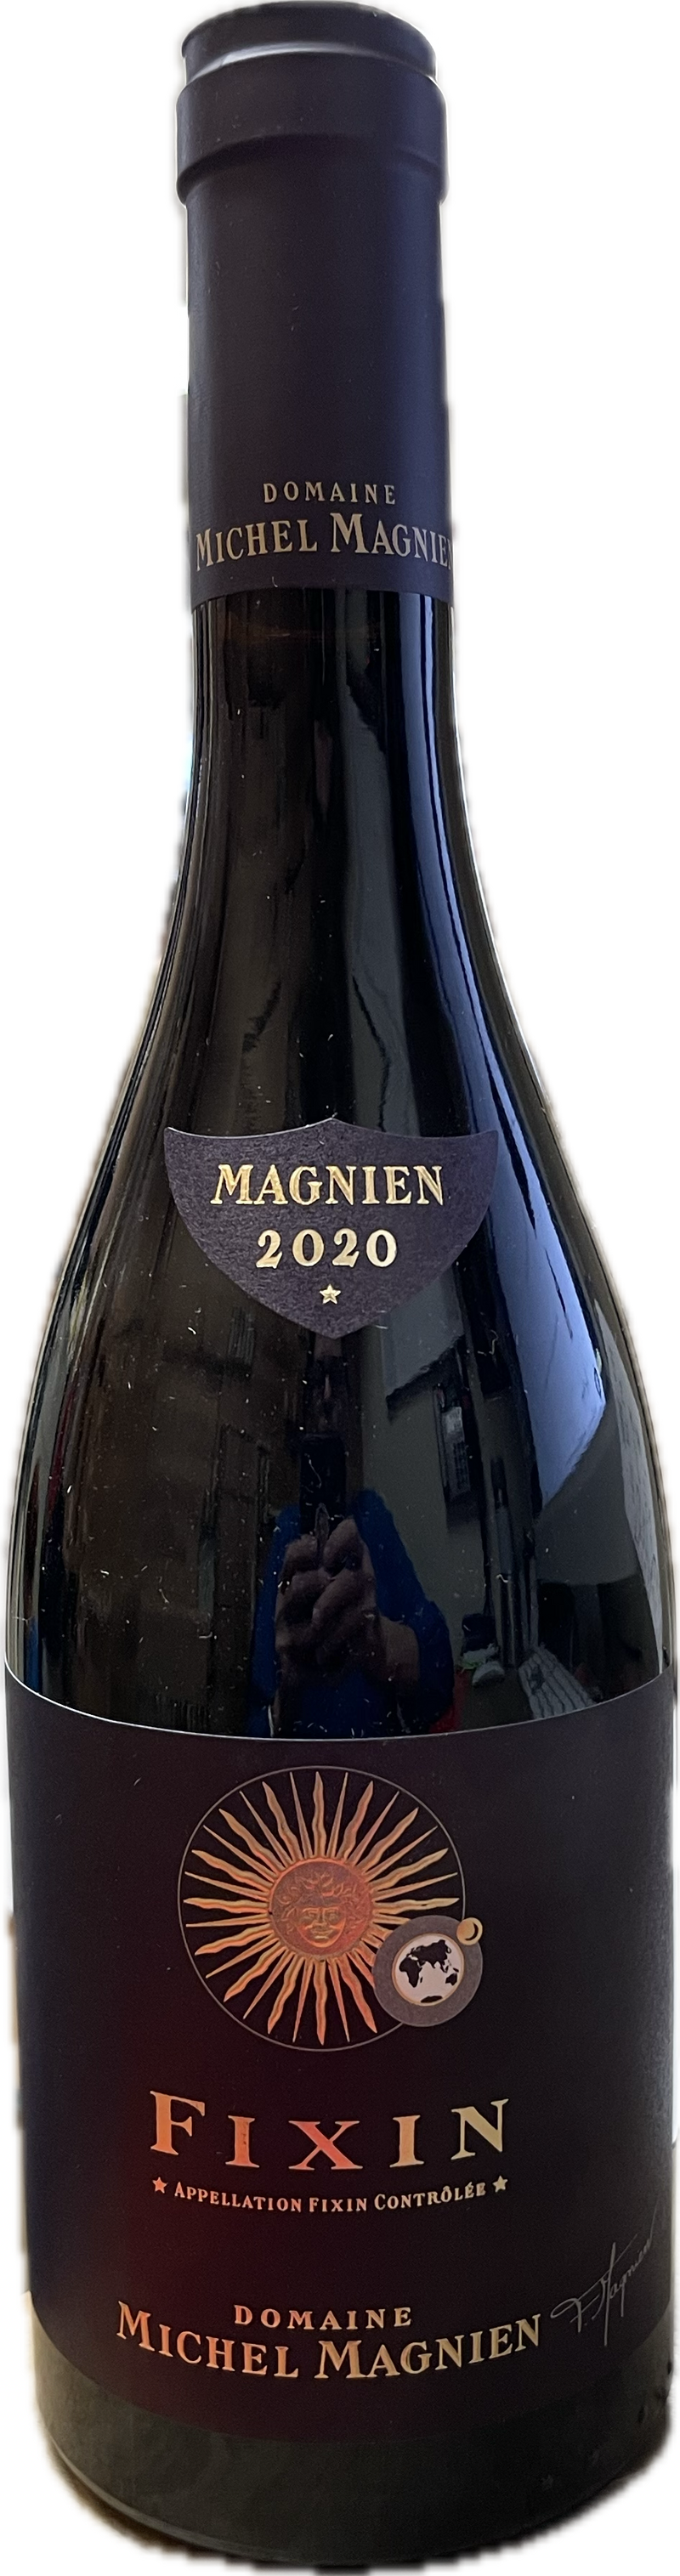 Domaine Michel Magnien 2020 Fixin 750ML A